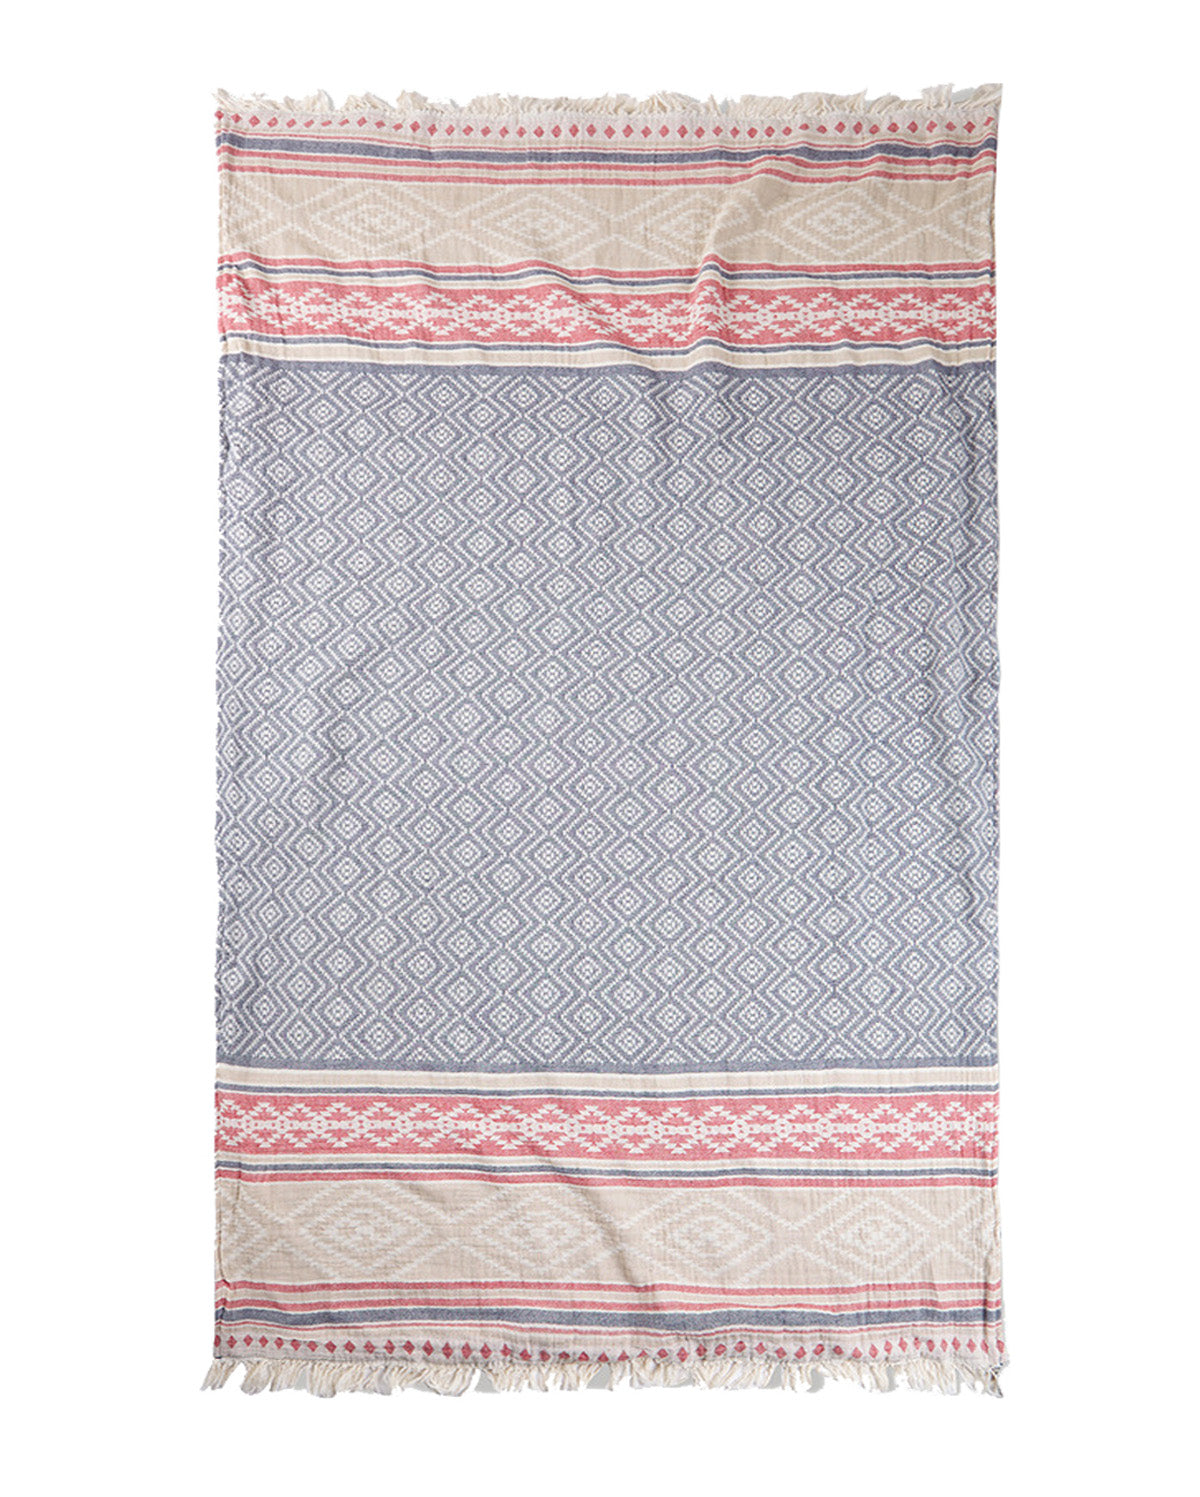 Cotton Ethnic Peshtemal Towel - Navy Blue